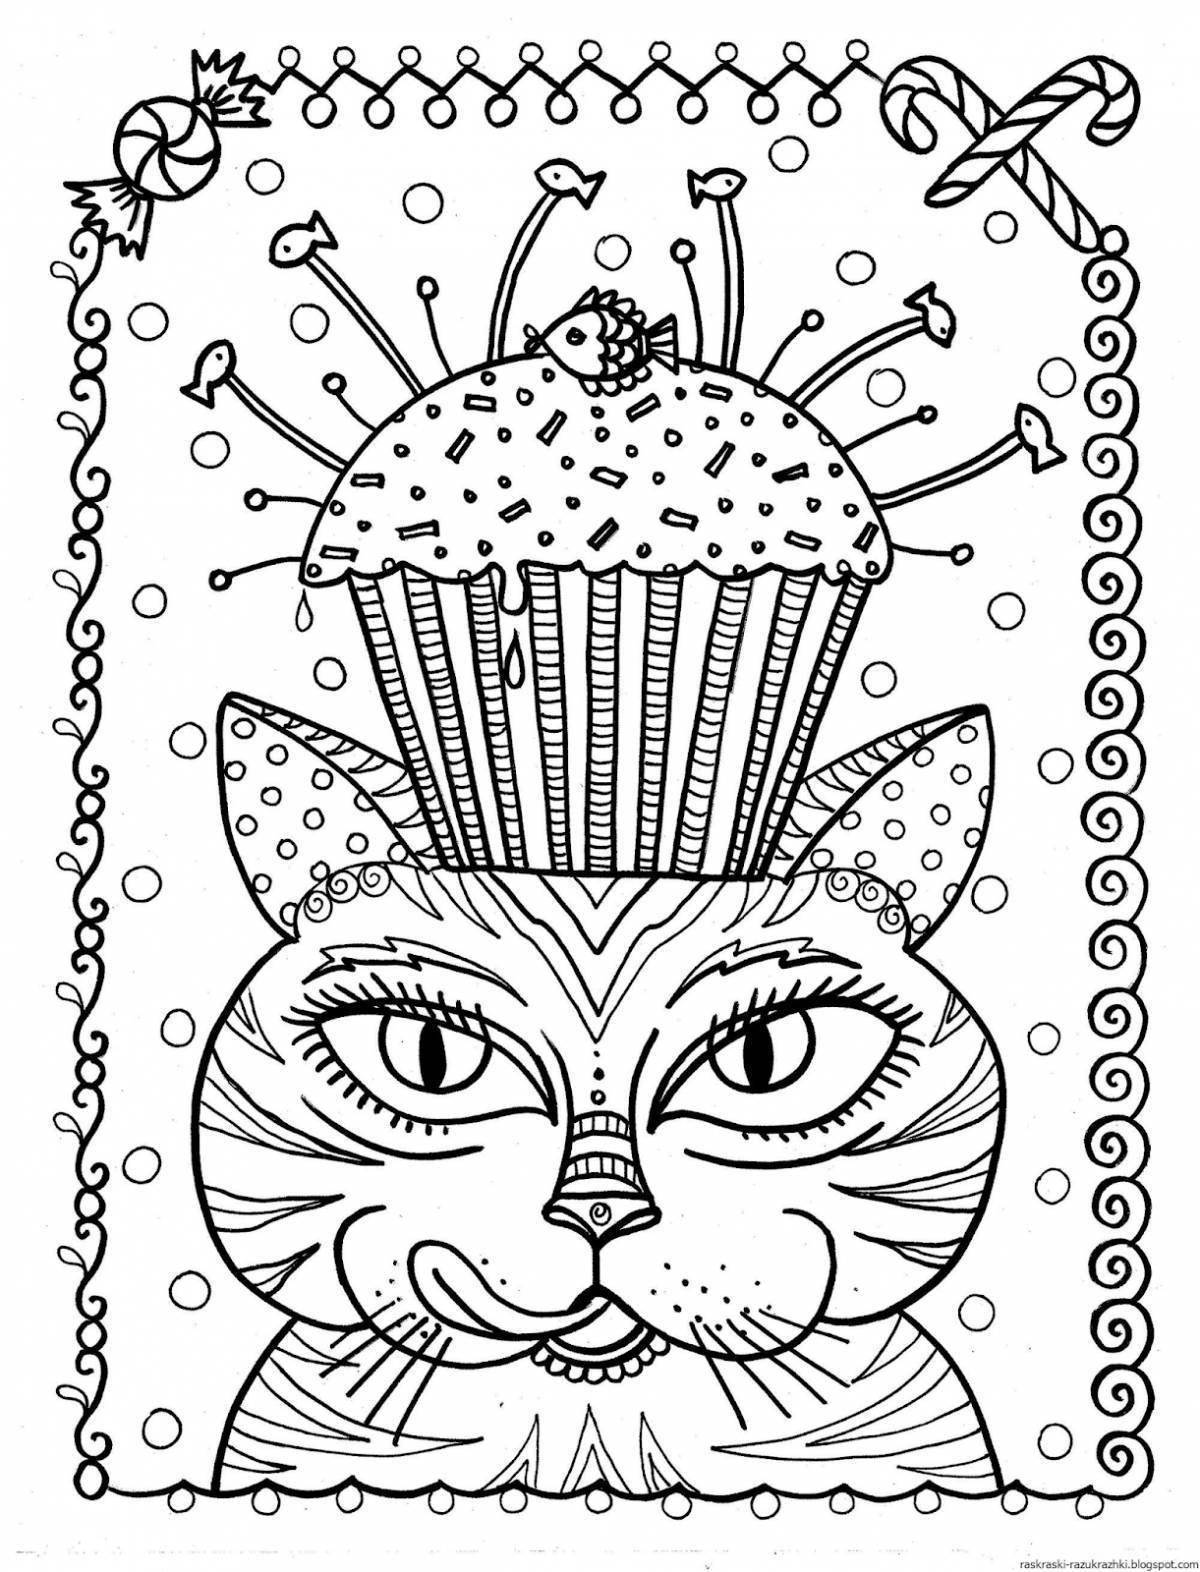 Coloring book joyful antistress cat